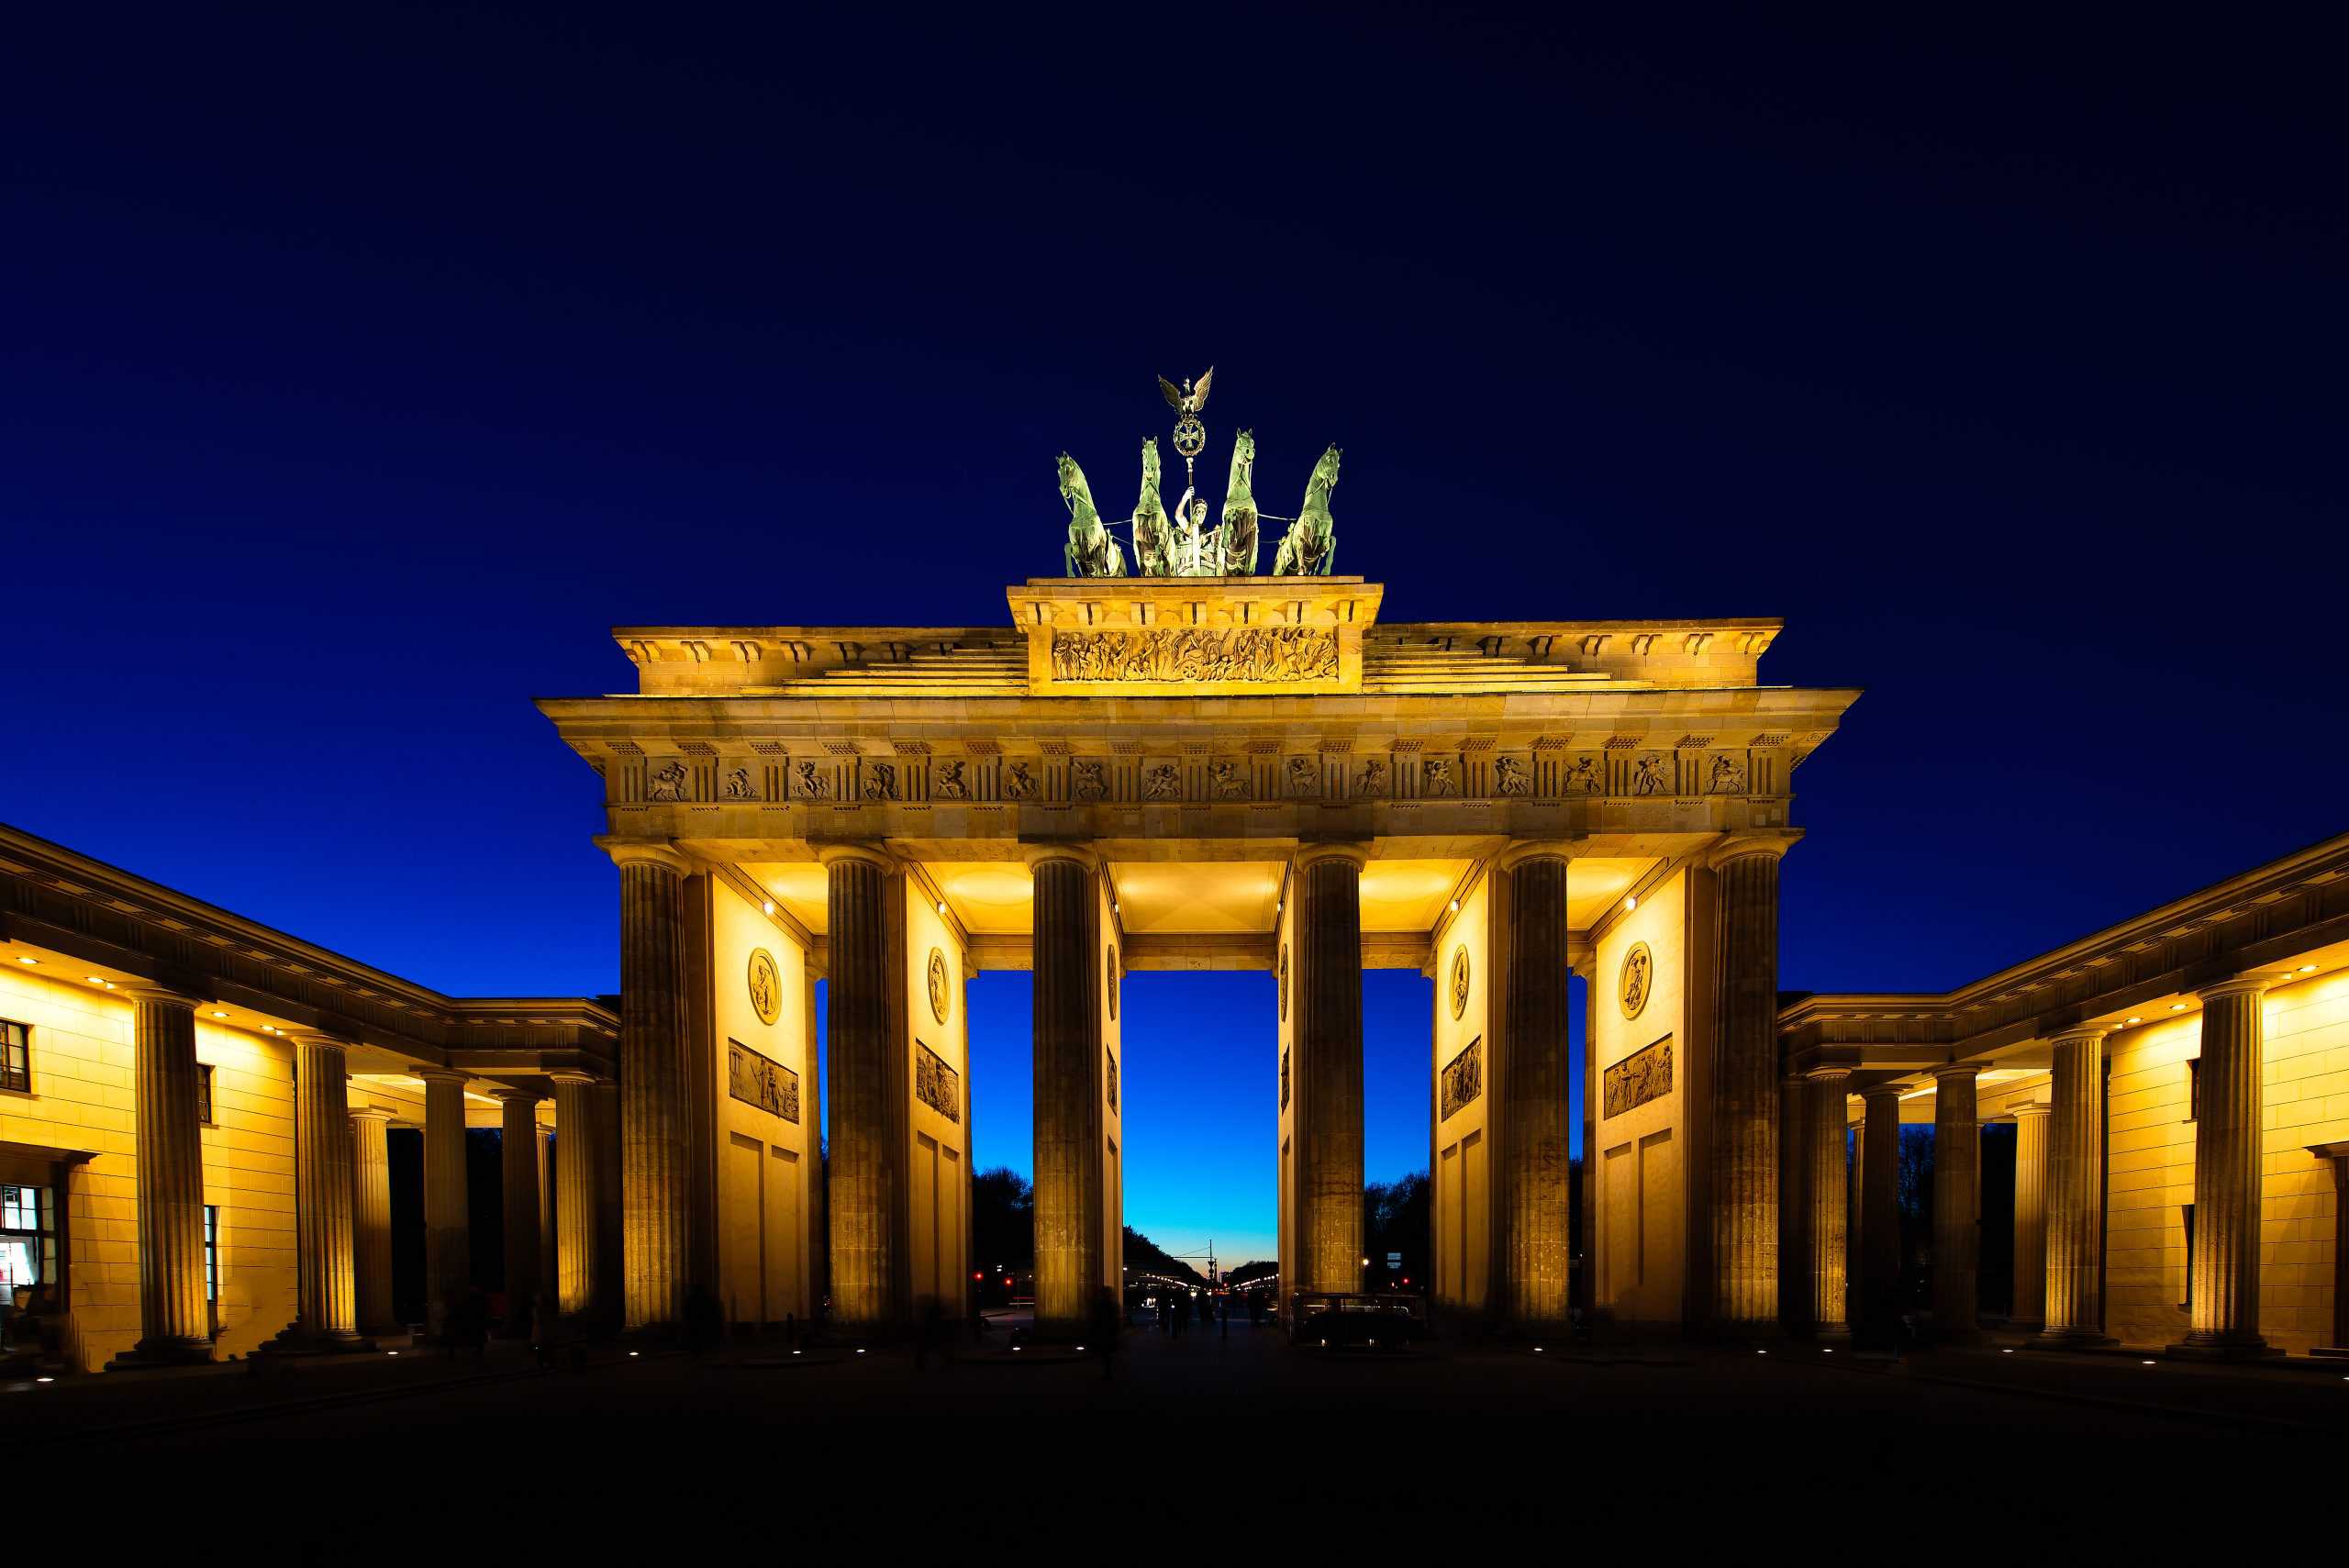 Brandenburg Gate in Berlin illuminated at night